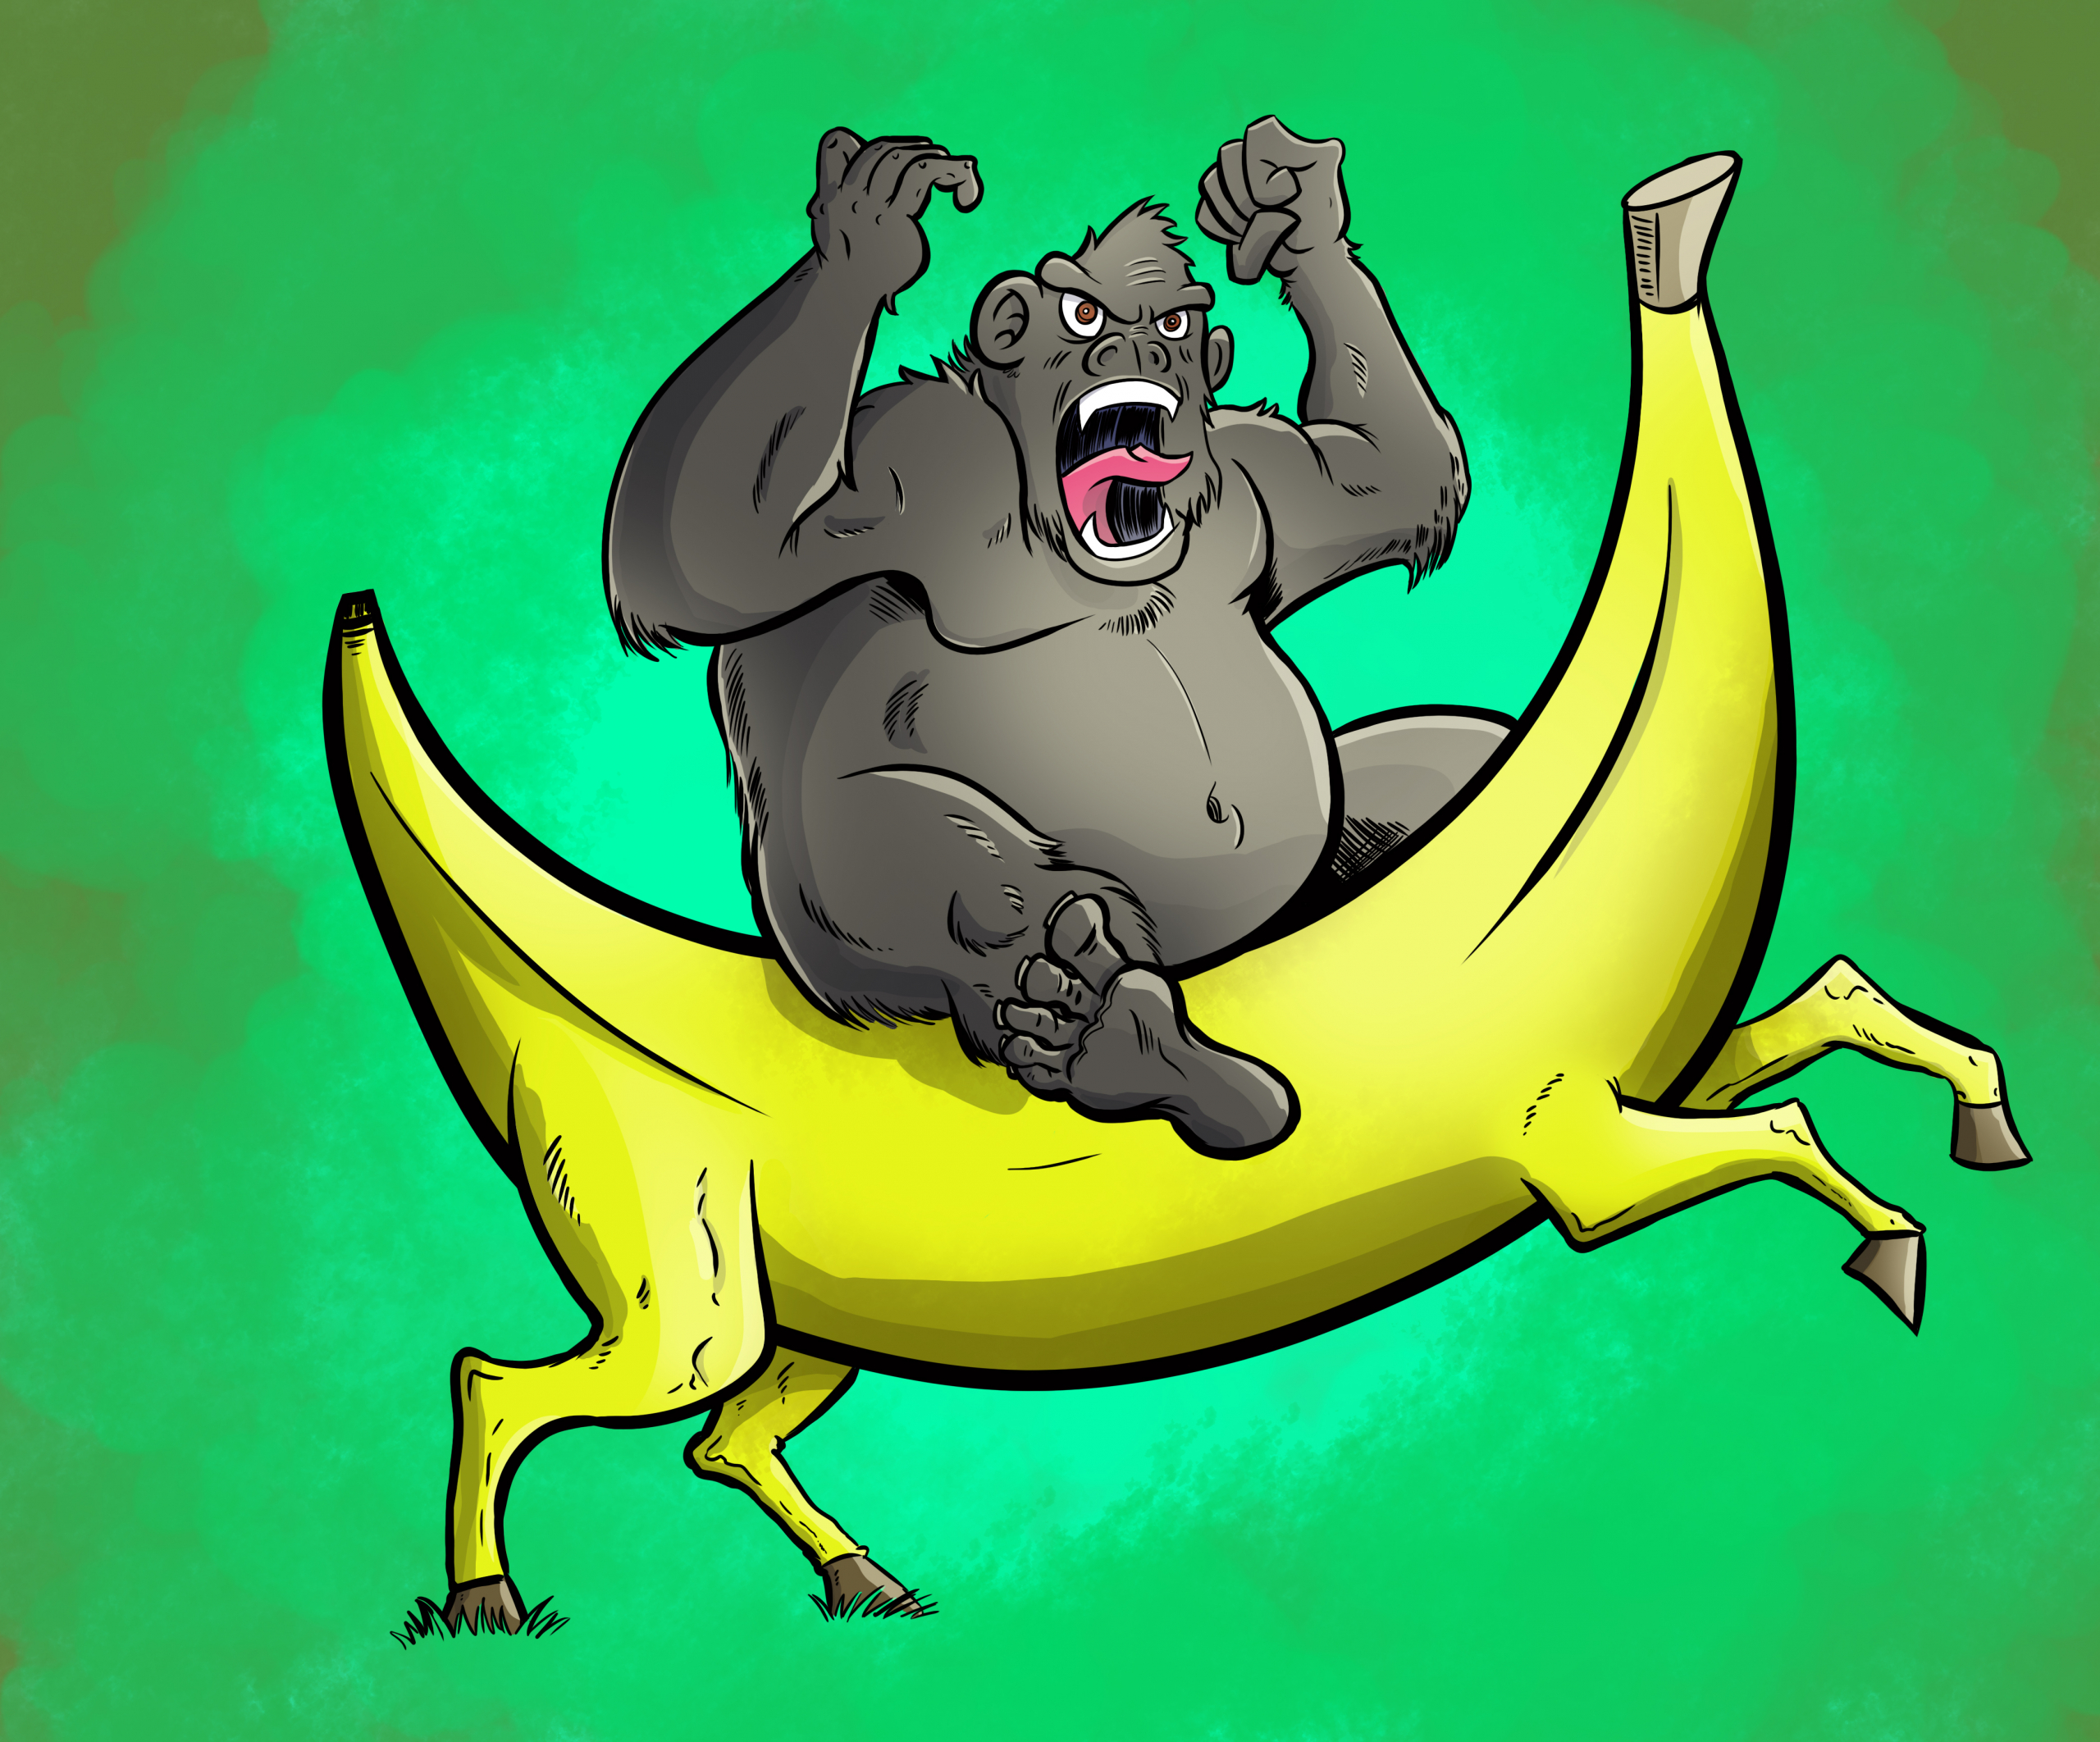 652476_crockercomics_gorilla-on-a-banana-horse